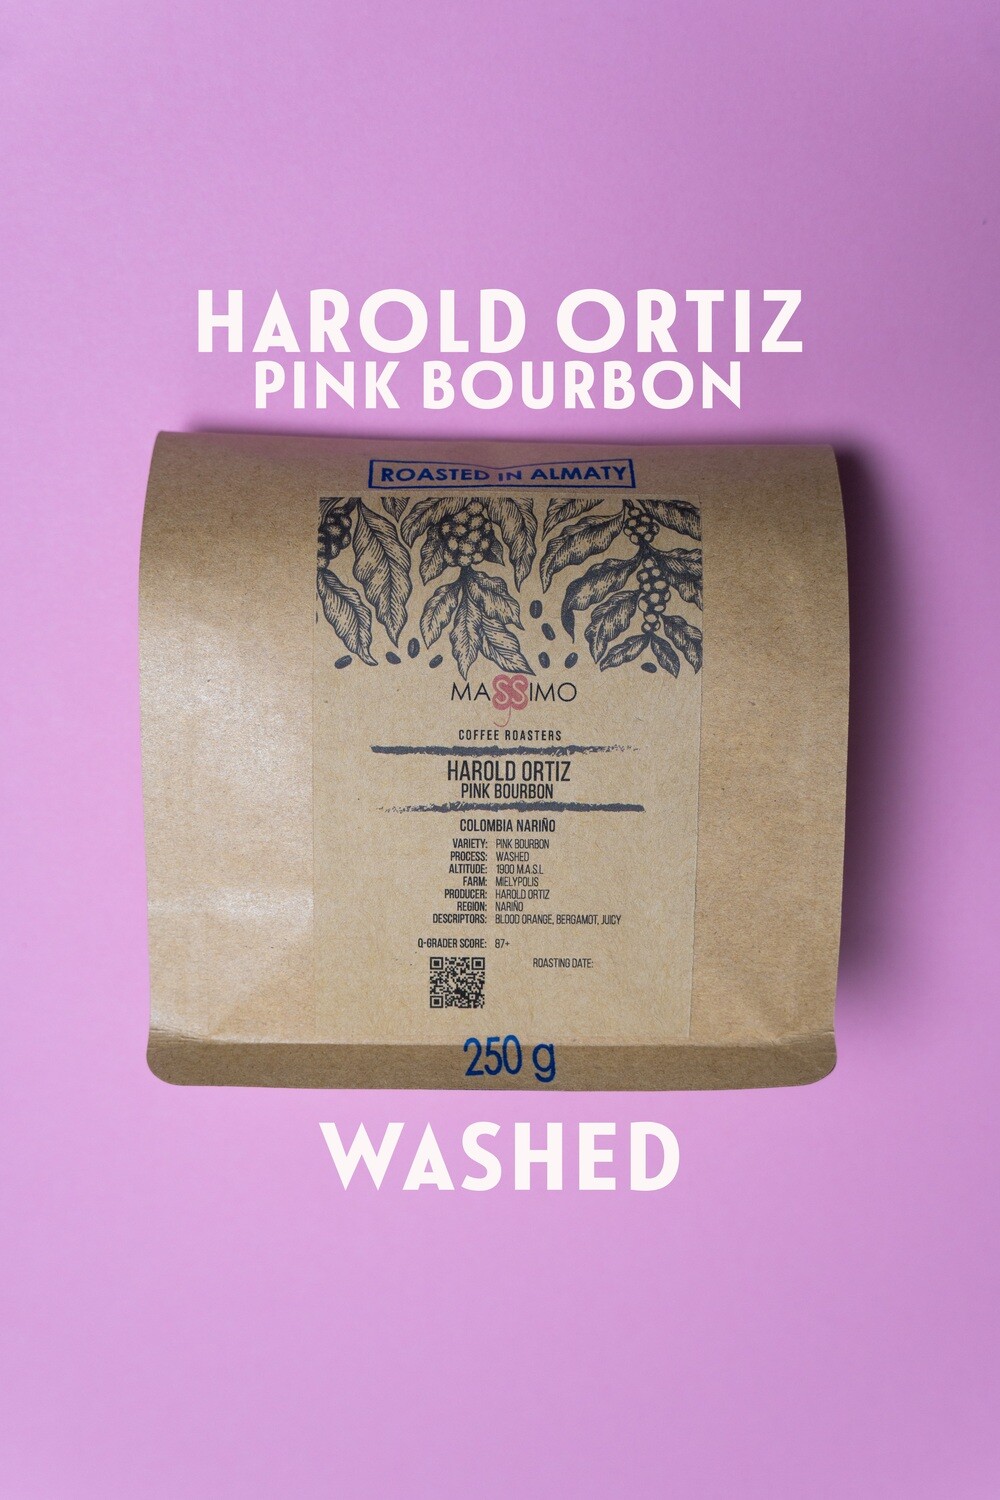 Harold Ortiz Pink Bourbon - Colombia Nariño​